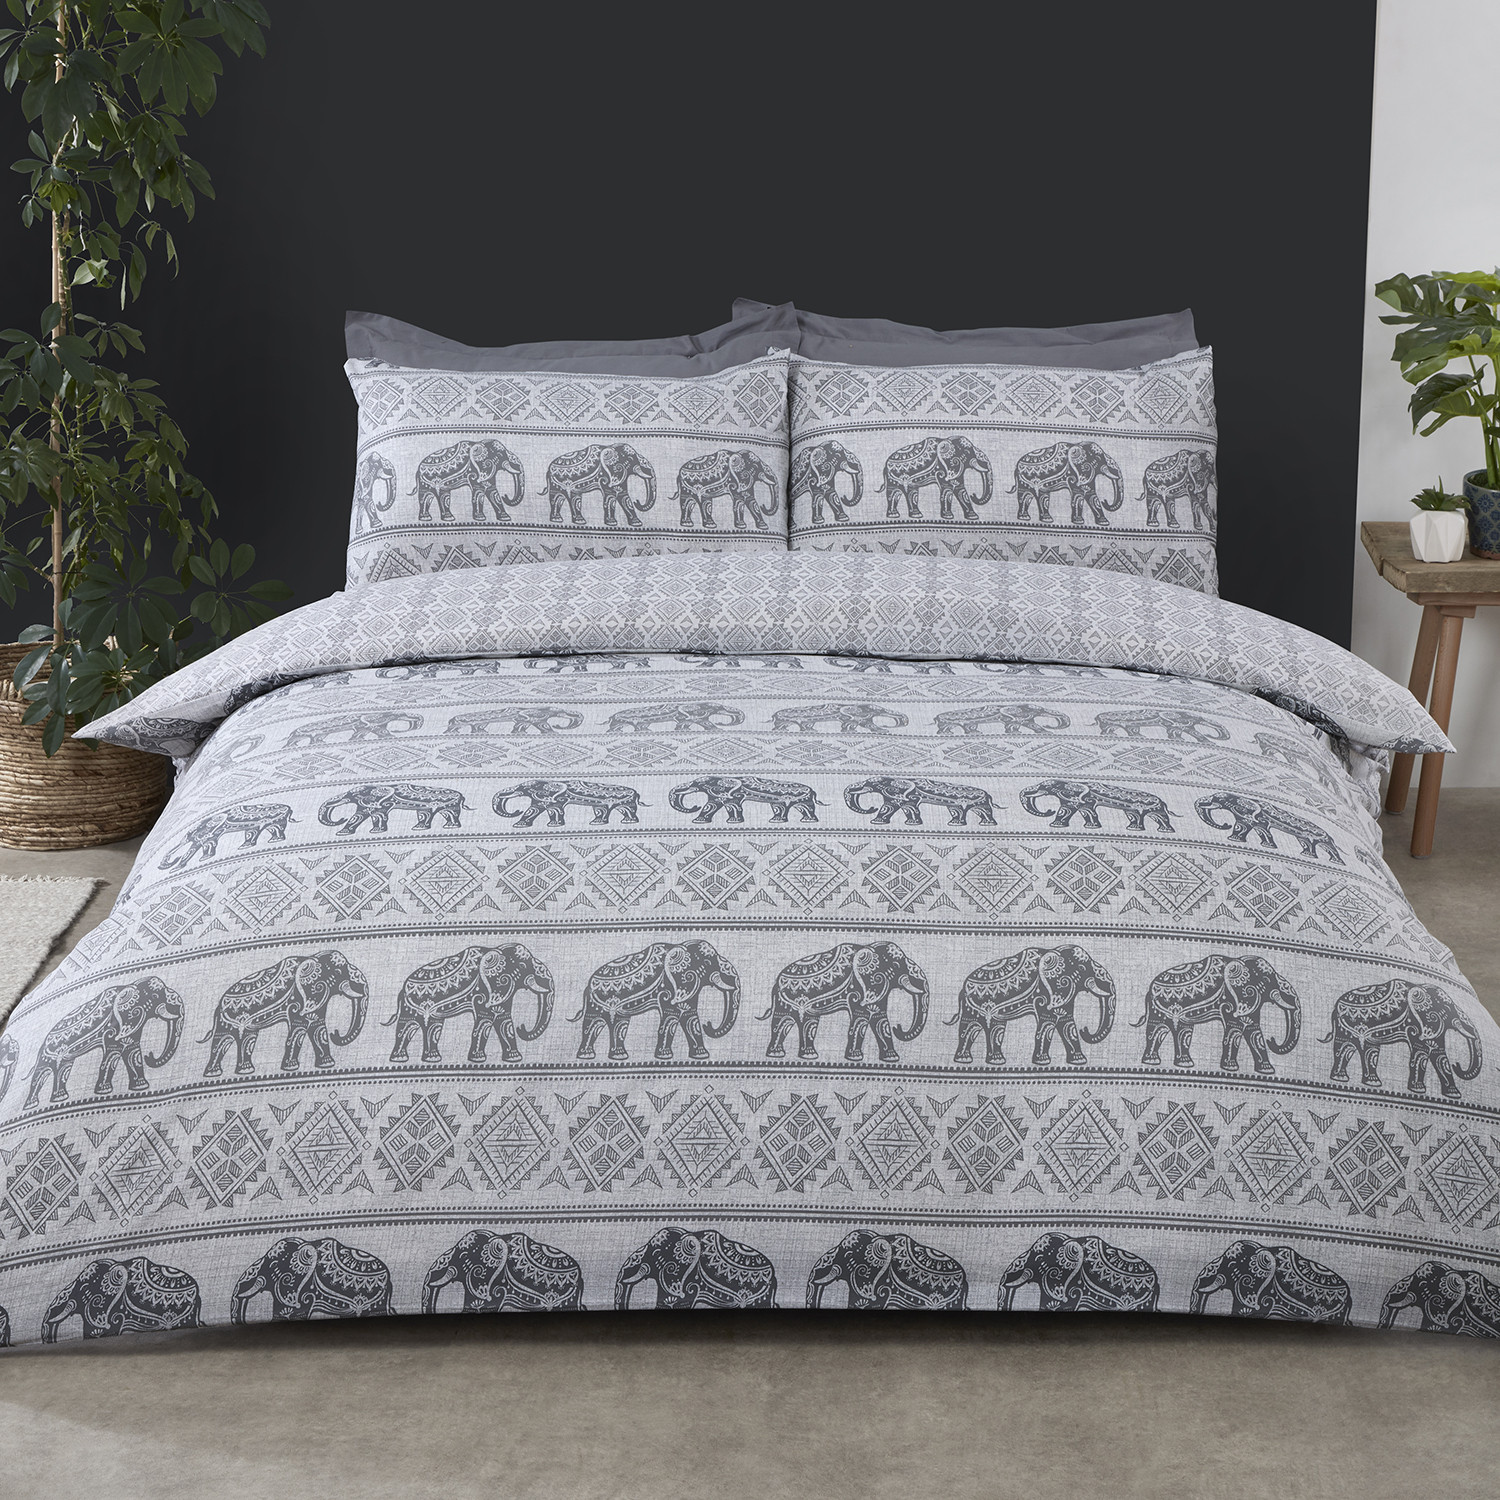 My Home Hathi Elephant Double Duvet Cover and Pillowcase Set Image 1